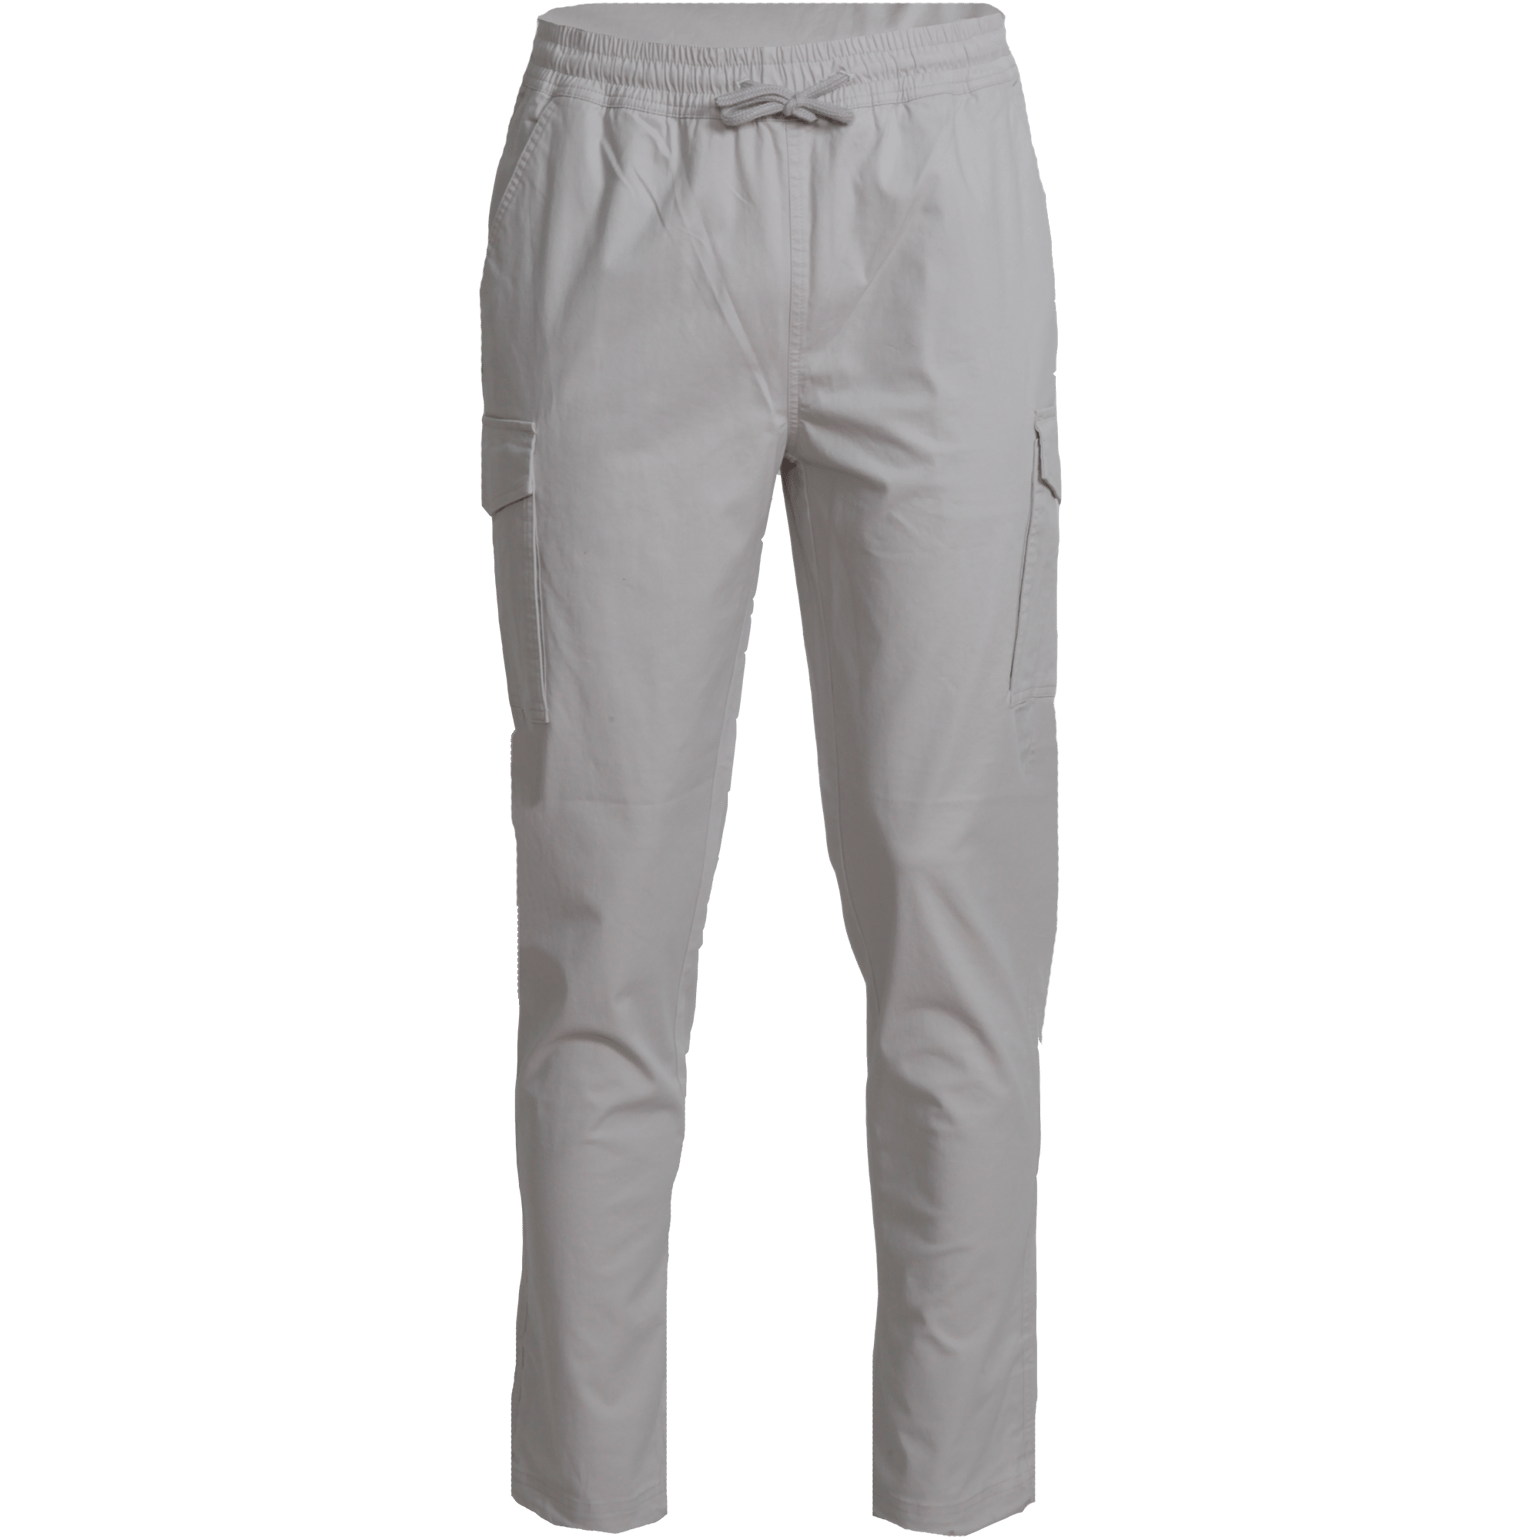 Dobsom Men's Cargo Pants Khaki